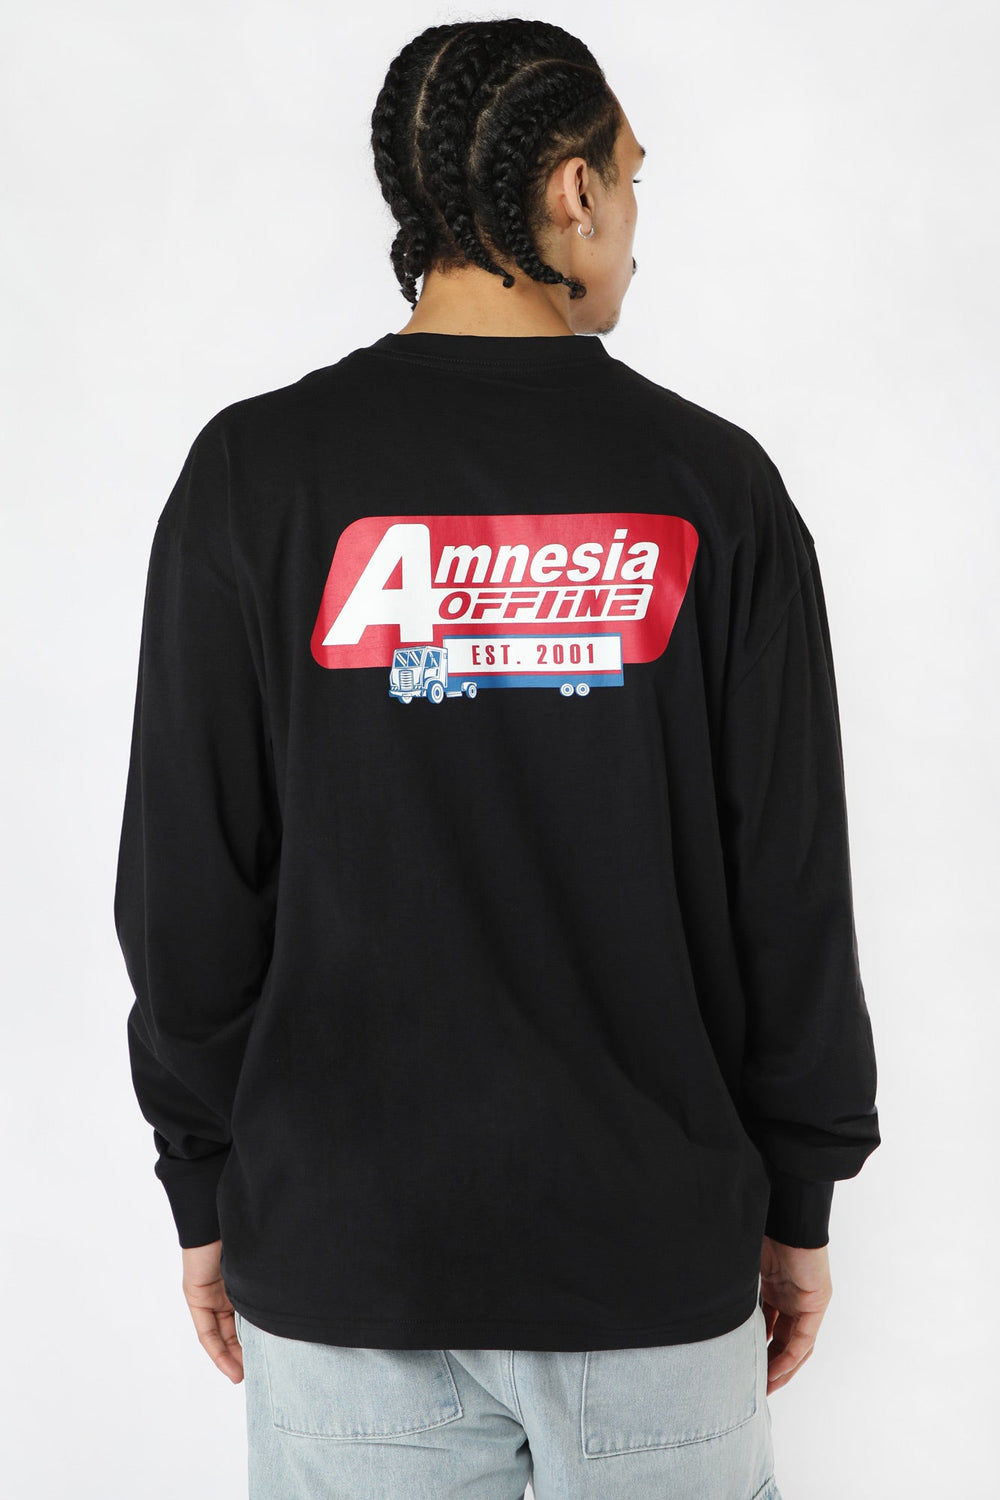 Amnesia Offline Mens Graphic Black Long Sleeve Top Amnesia Offline Mens Graphic Black Long Sleeve Top